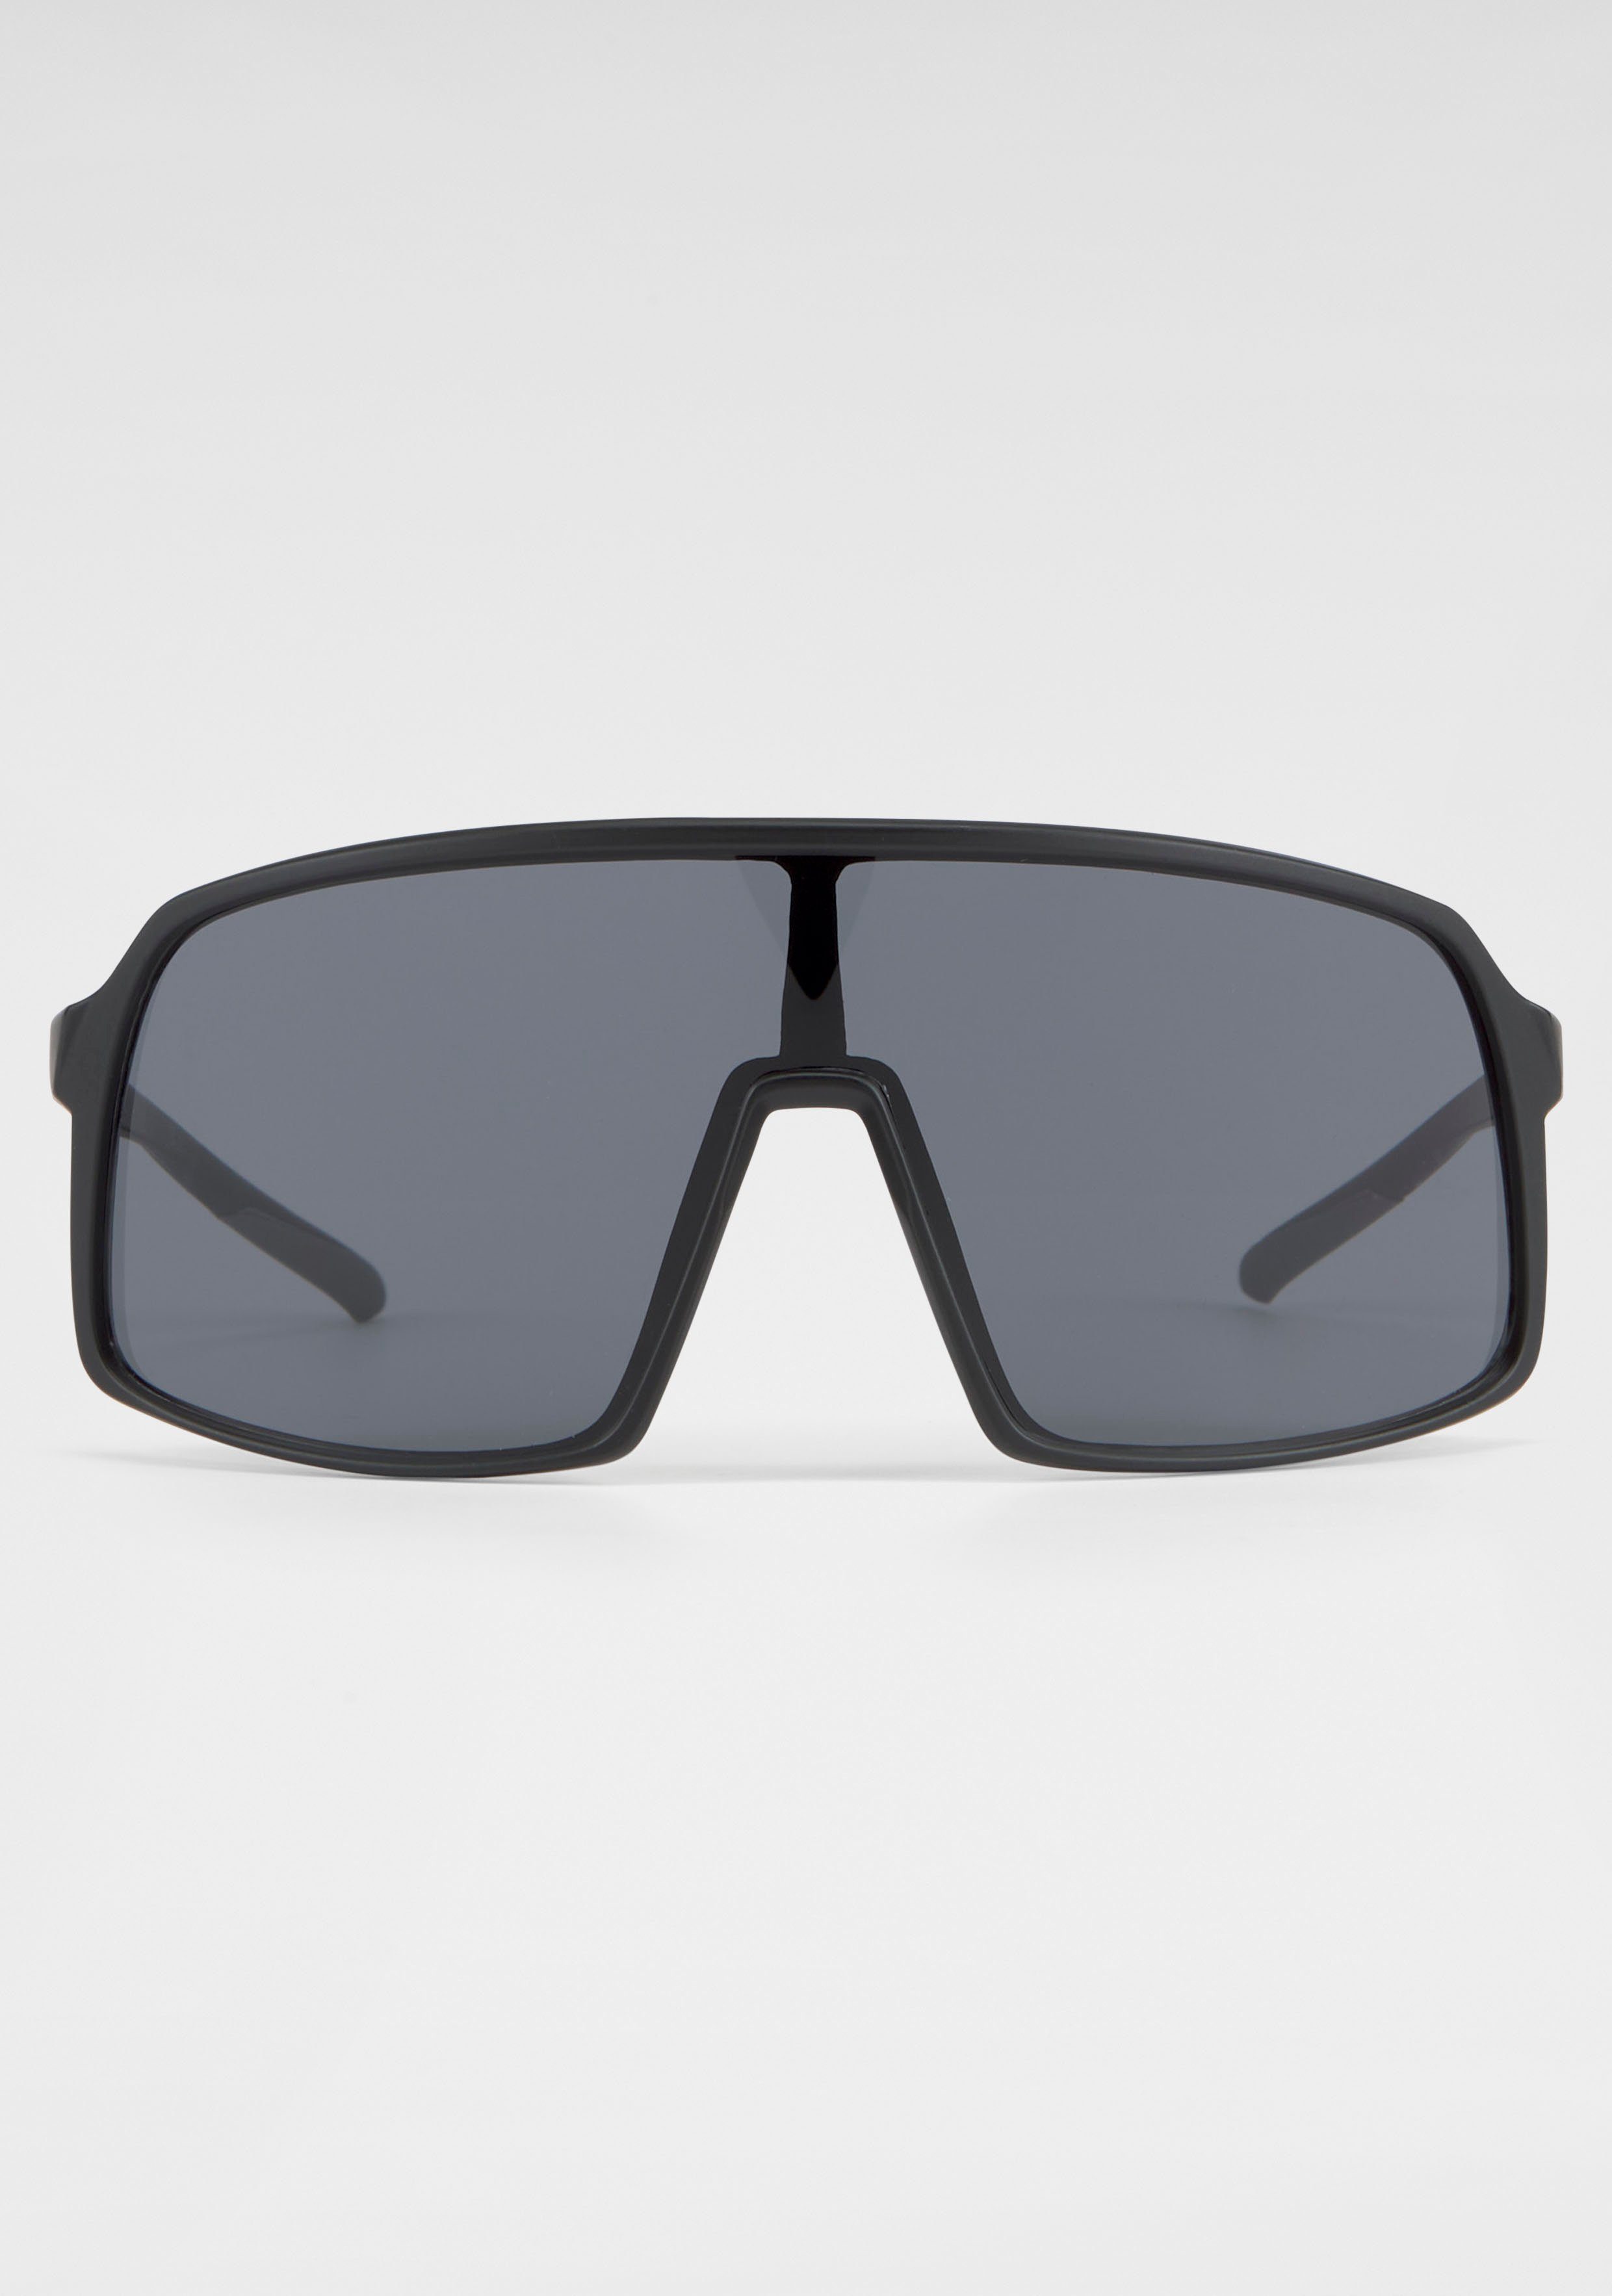 BACK IN BLACK Sonnenbrille große Eyewear Gläser schwarz